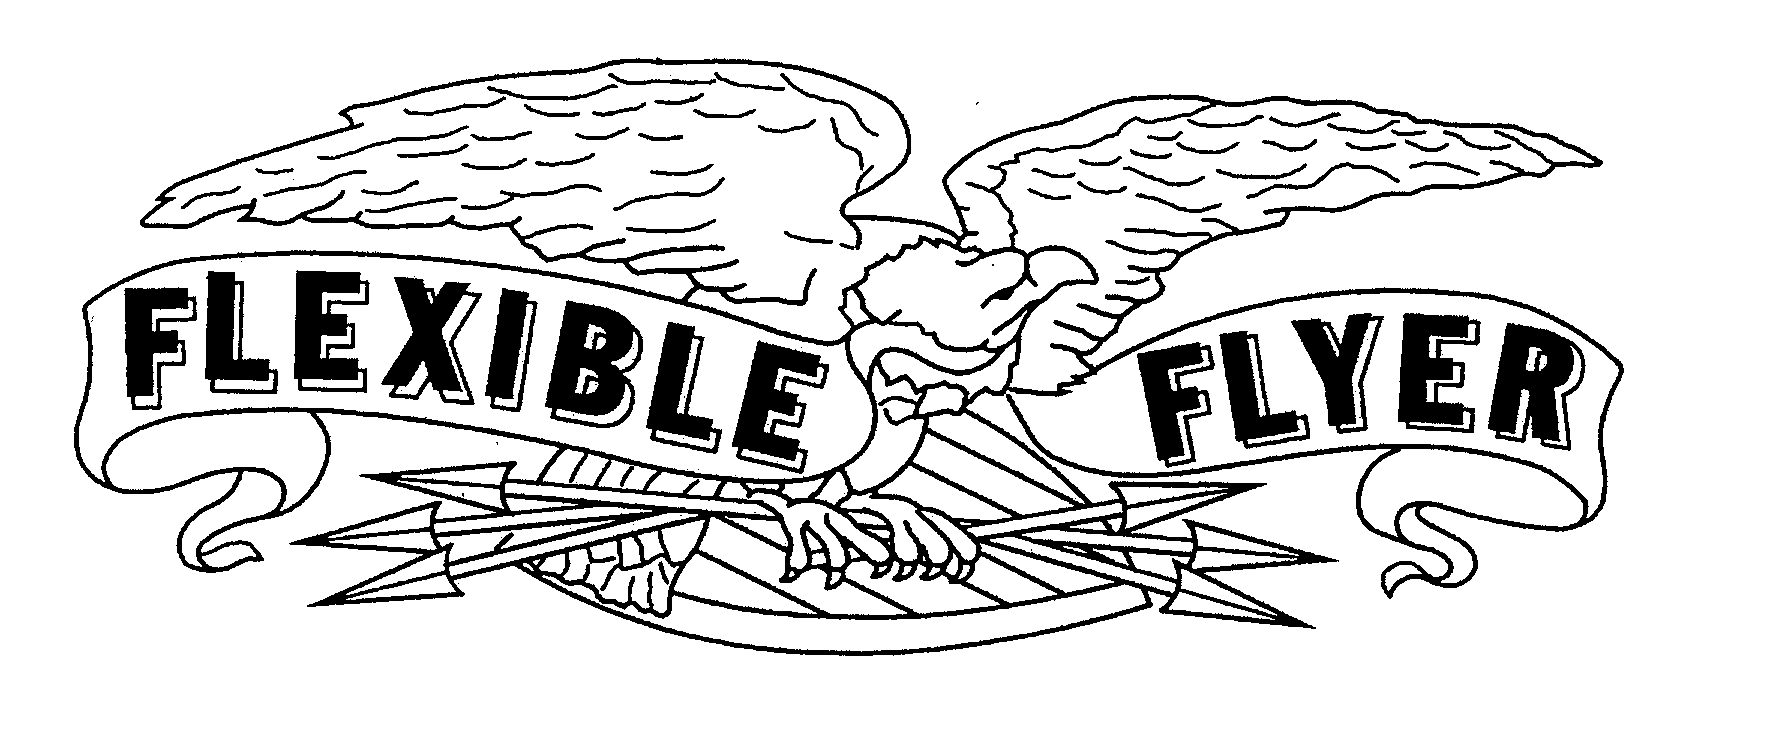 Trademark Logo FLEXIBLE FLYER